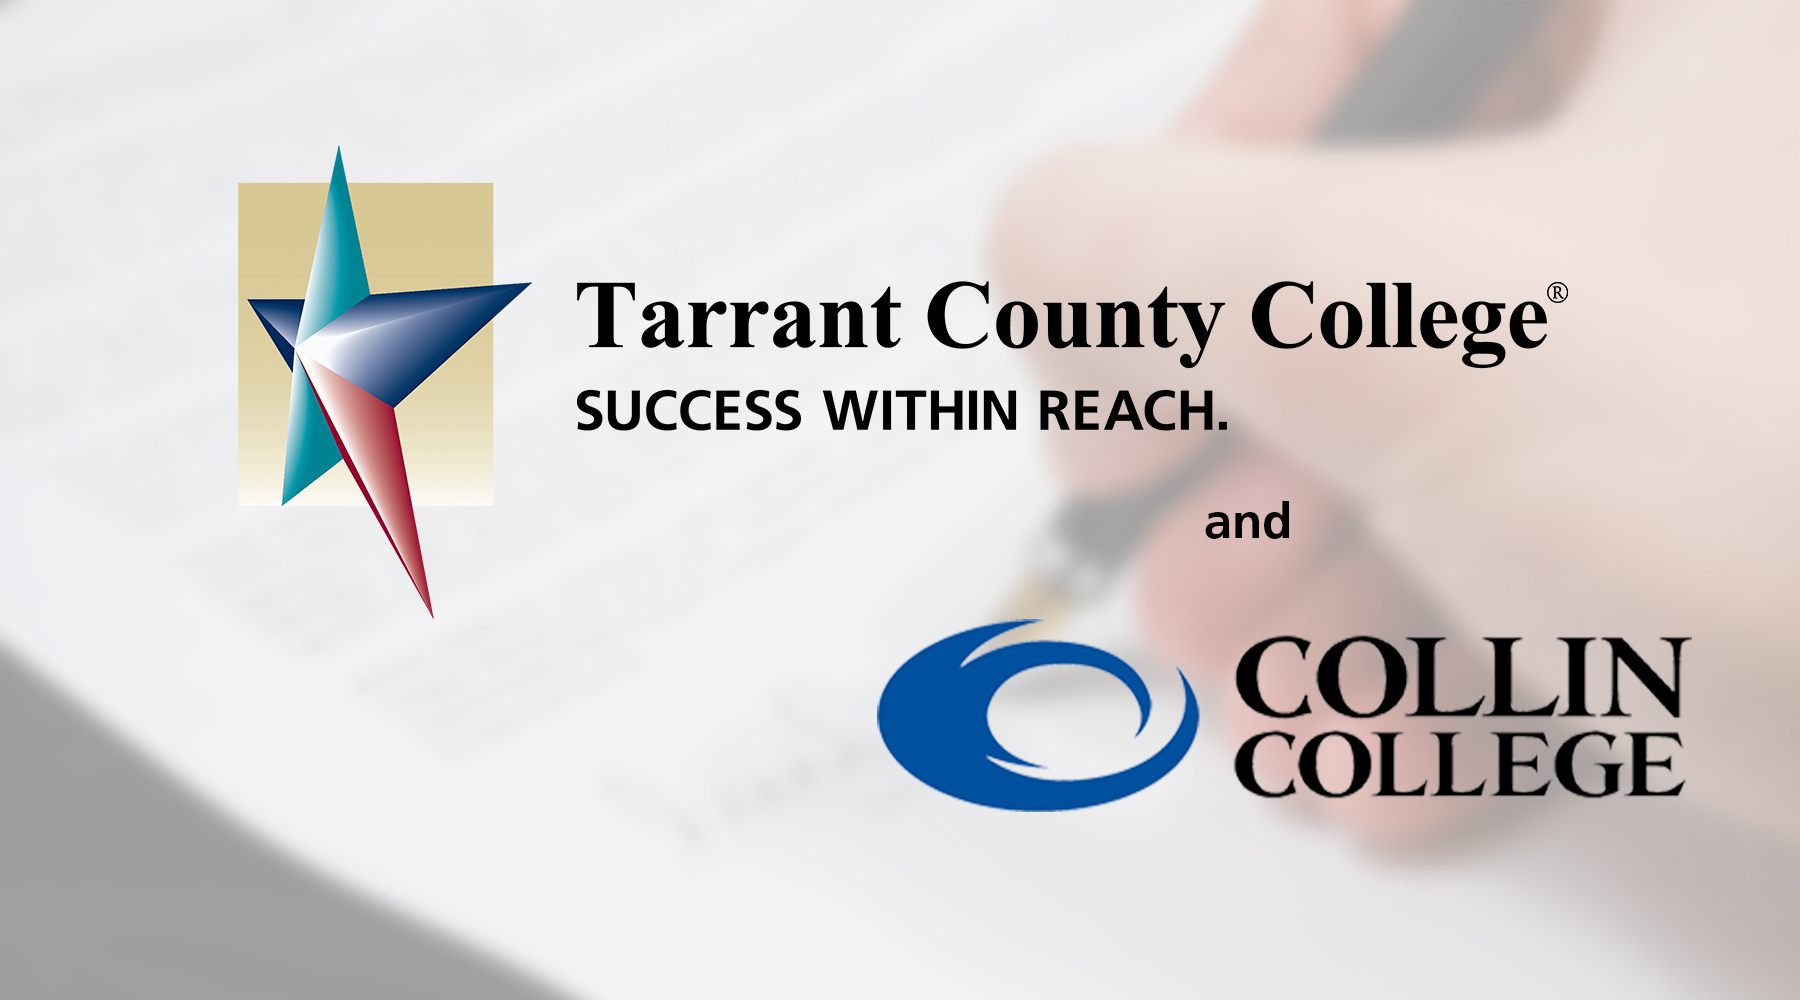 tcc-collin-college-partnership-benefits-cybersecurity-students-tcc-news